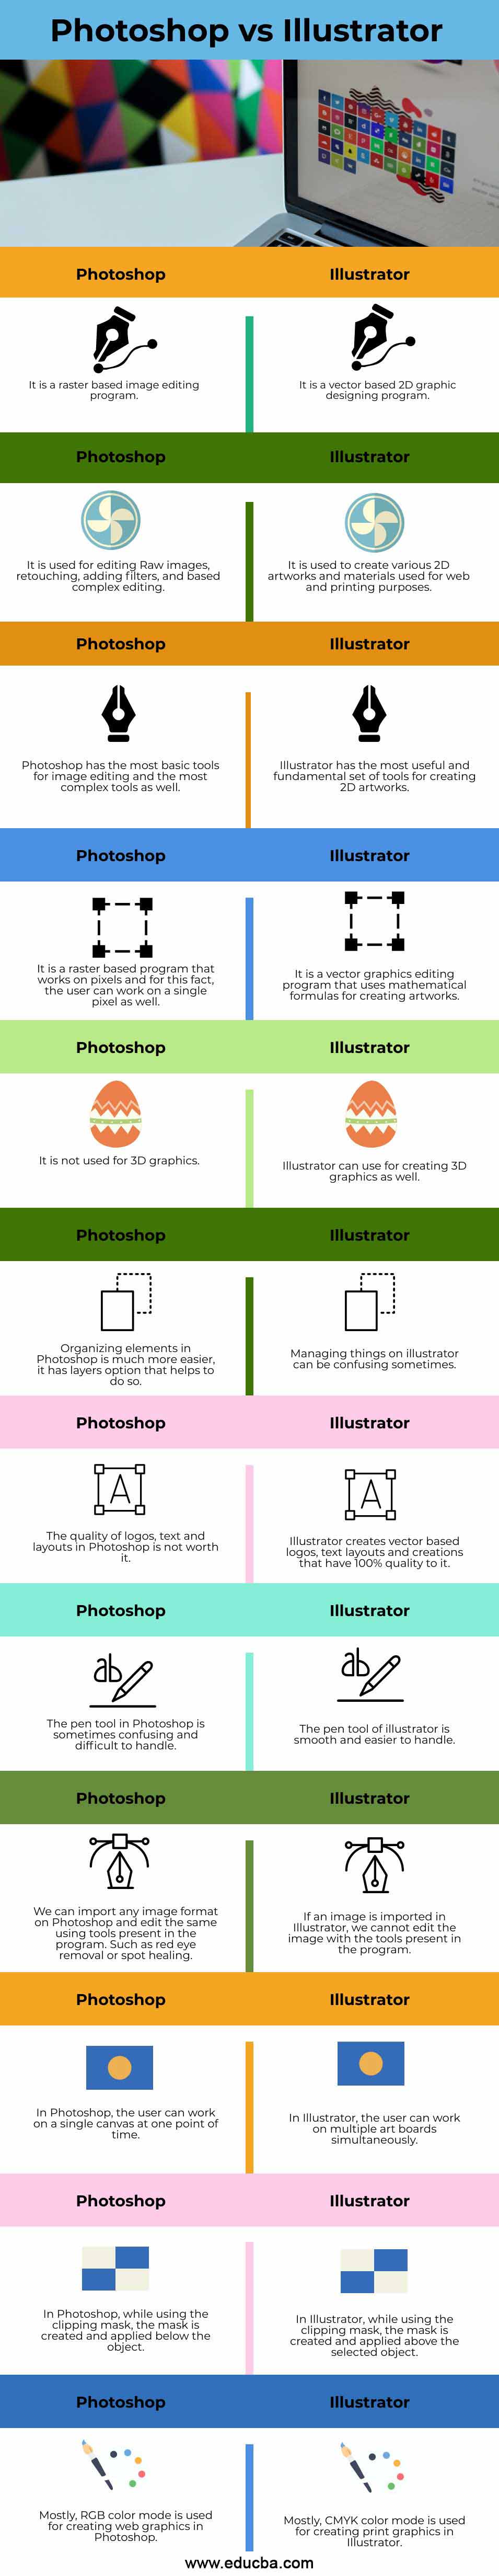 Photoshop vs Illustrator info